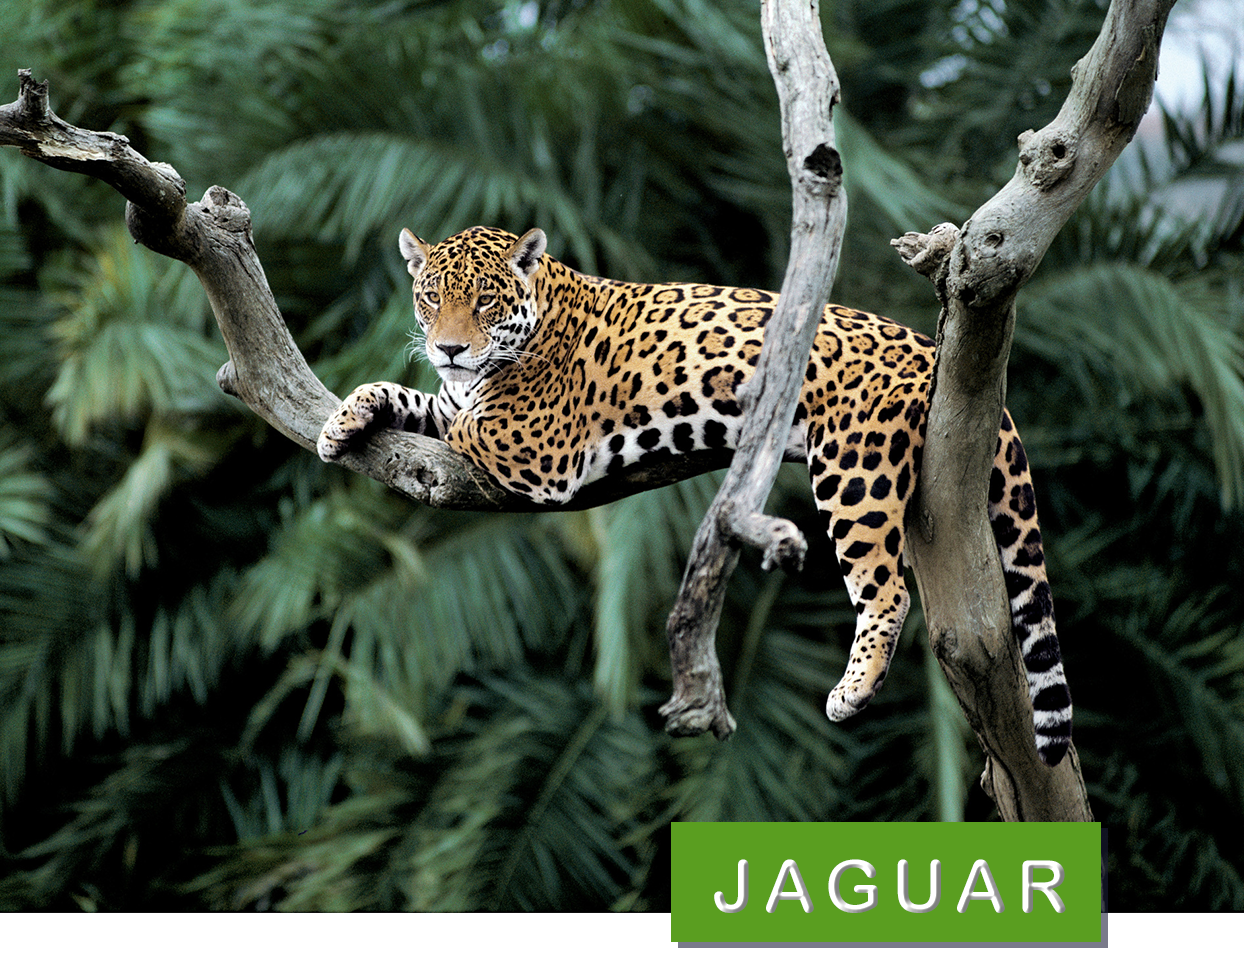 Jaguar i träd